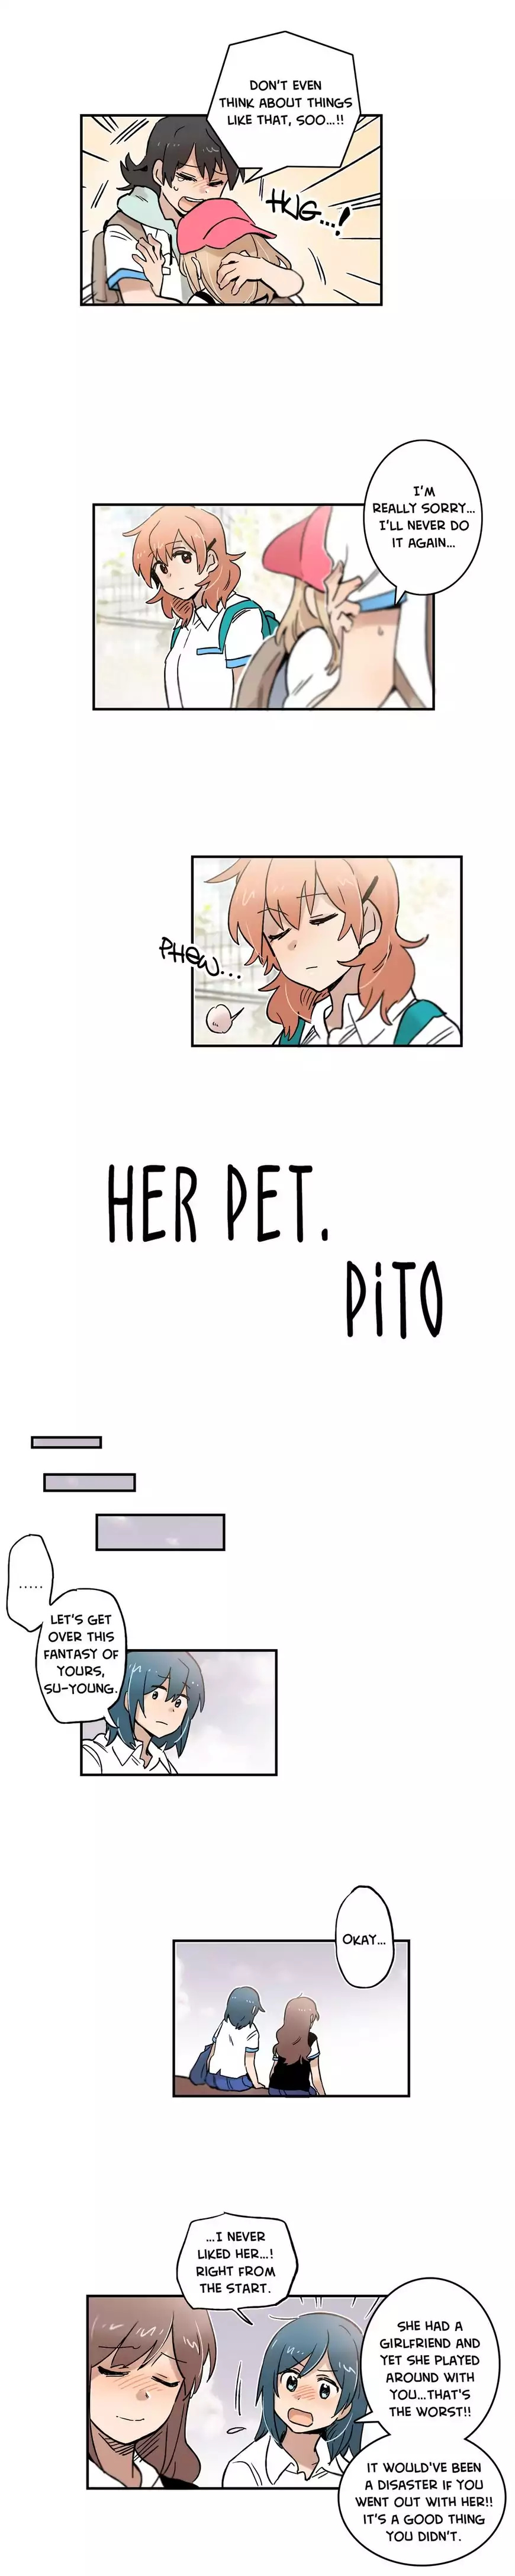 Her Pet image